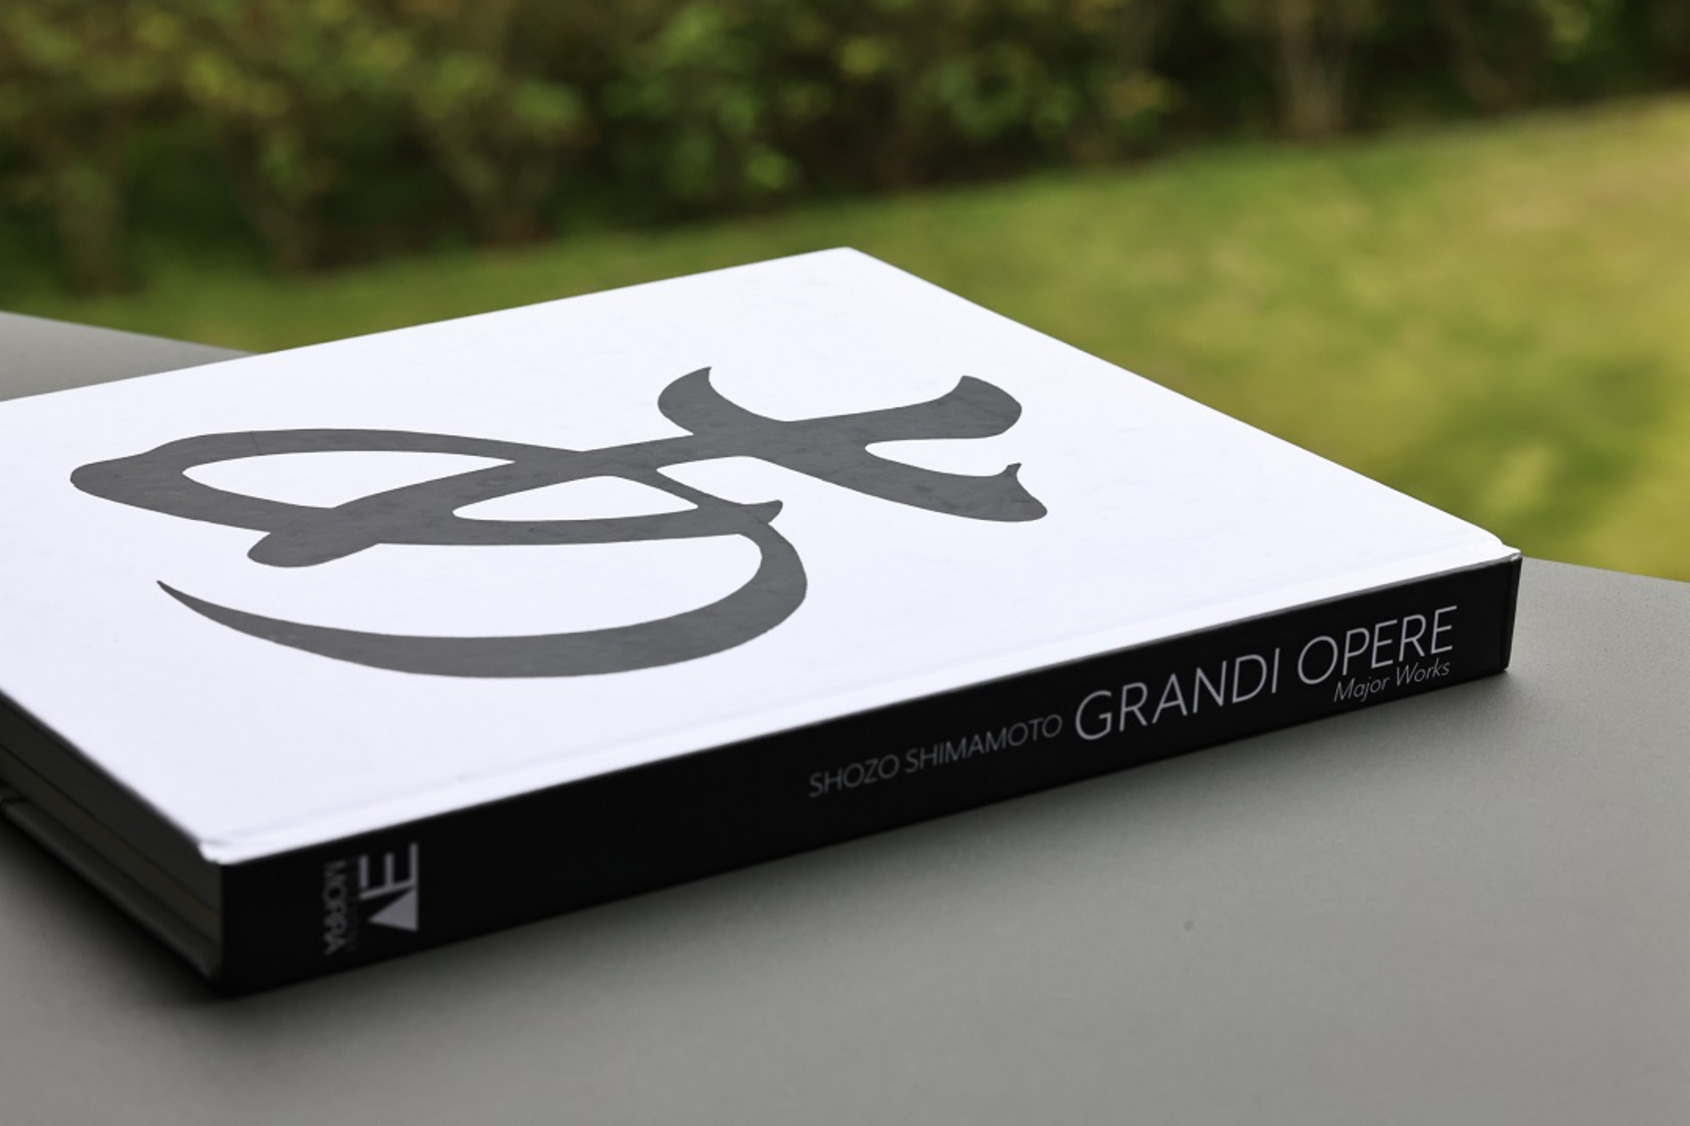  Shozo Shimamoto Grandi Opere Major Works Catalogue © ALIEN Art